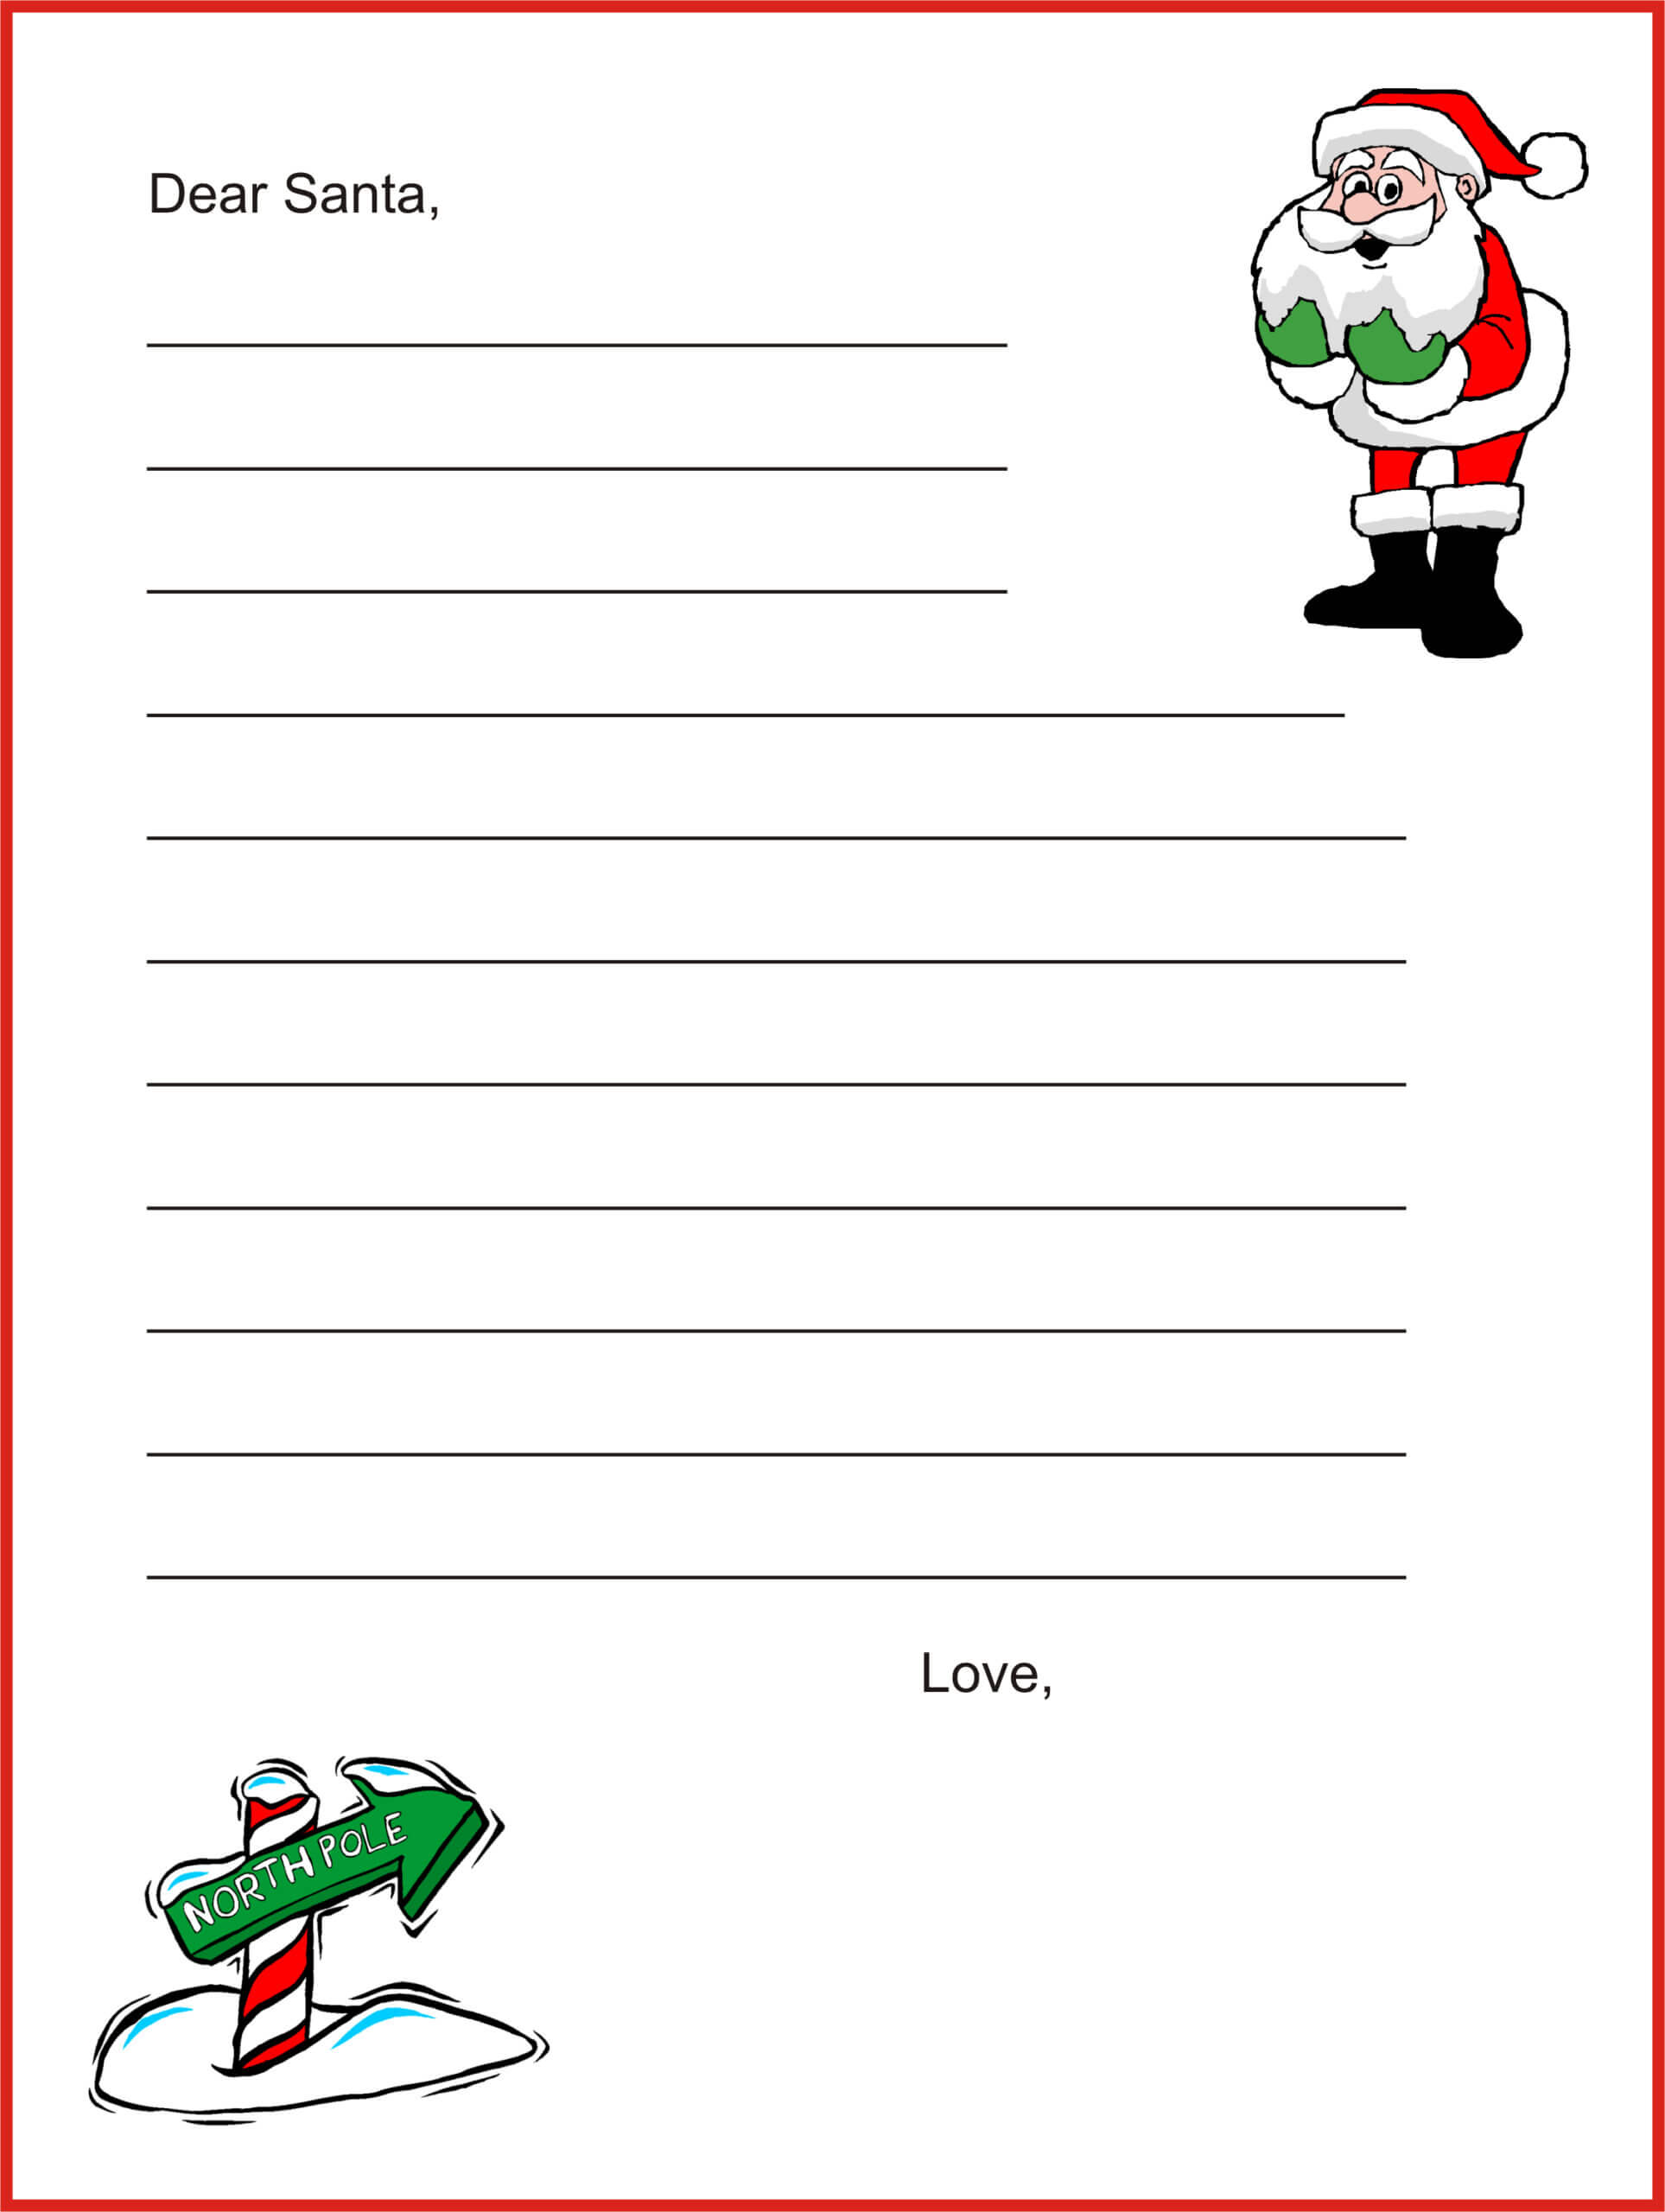 Dear Santa Letter | In Blank Letter Writing Template For Kids